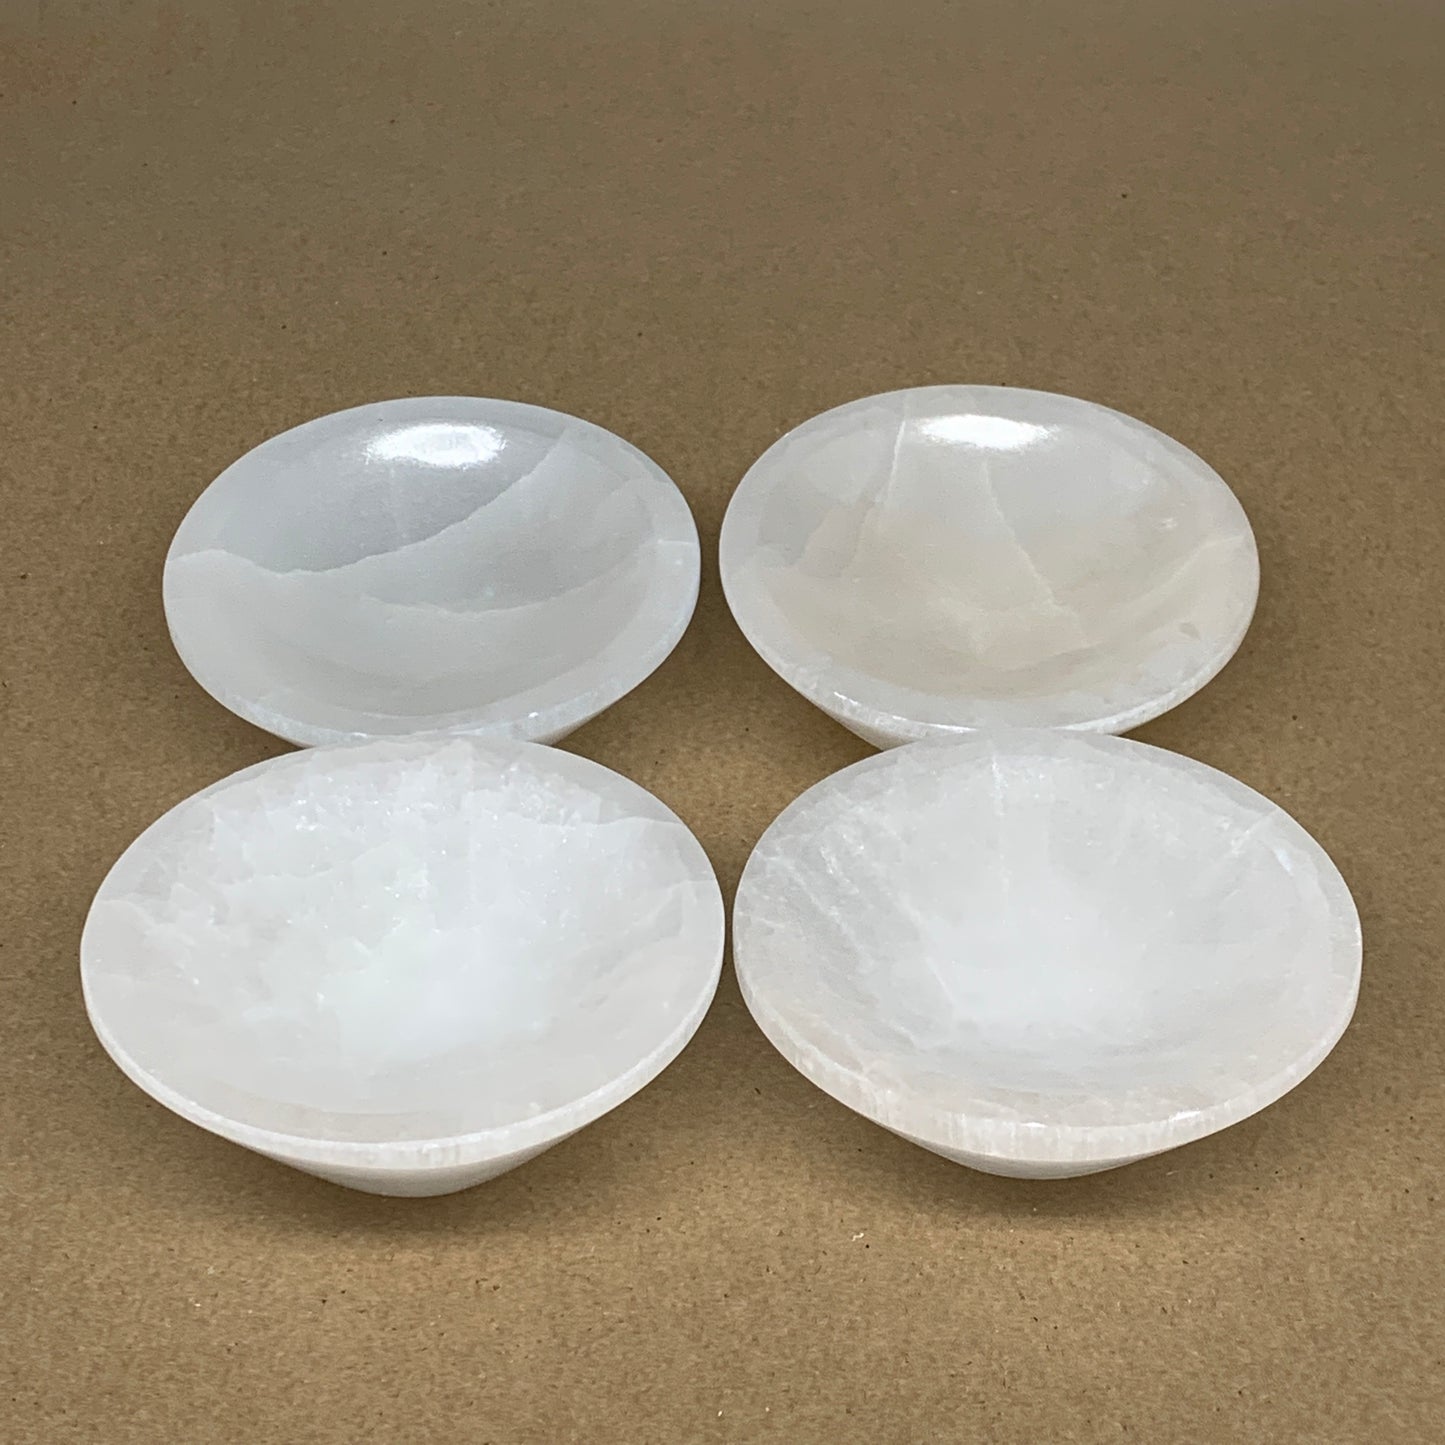 4pcs, 1166g, 3.9"-4" Natural Round Selenite Bowls Crystals from Morocco, B9202